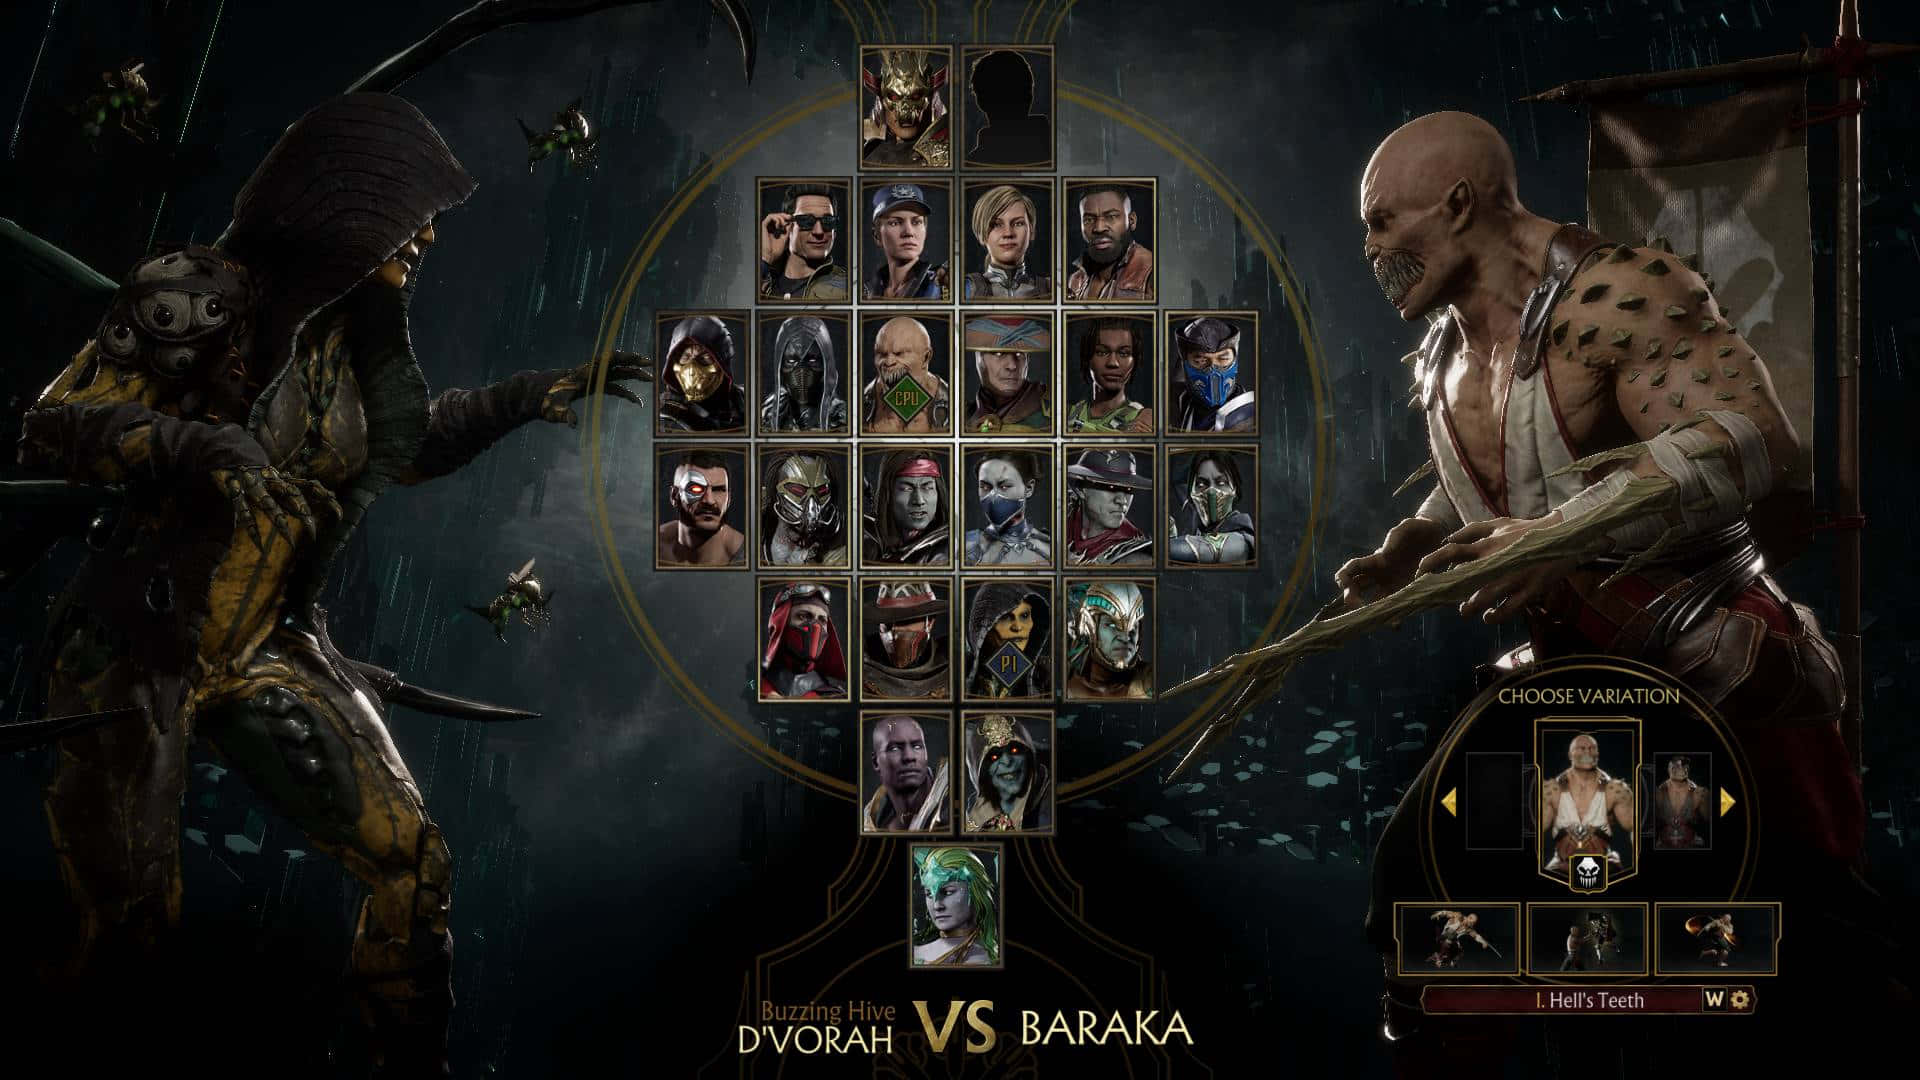 Fierce and Fearful Baraka in Mortal Kombat Wallpaper